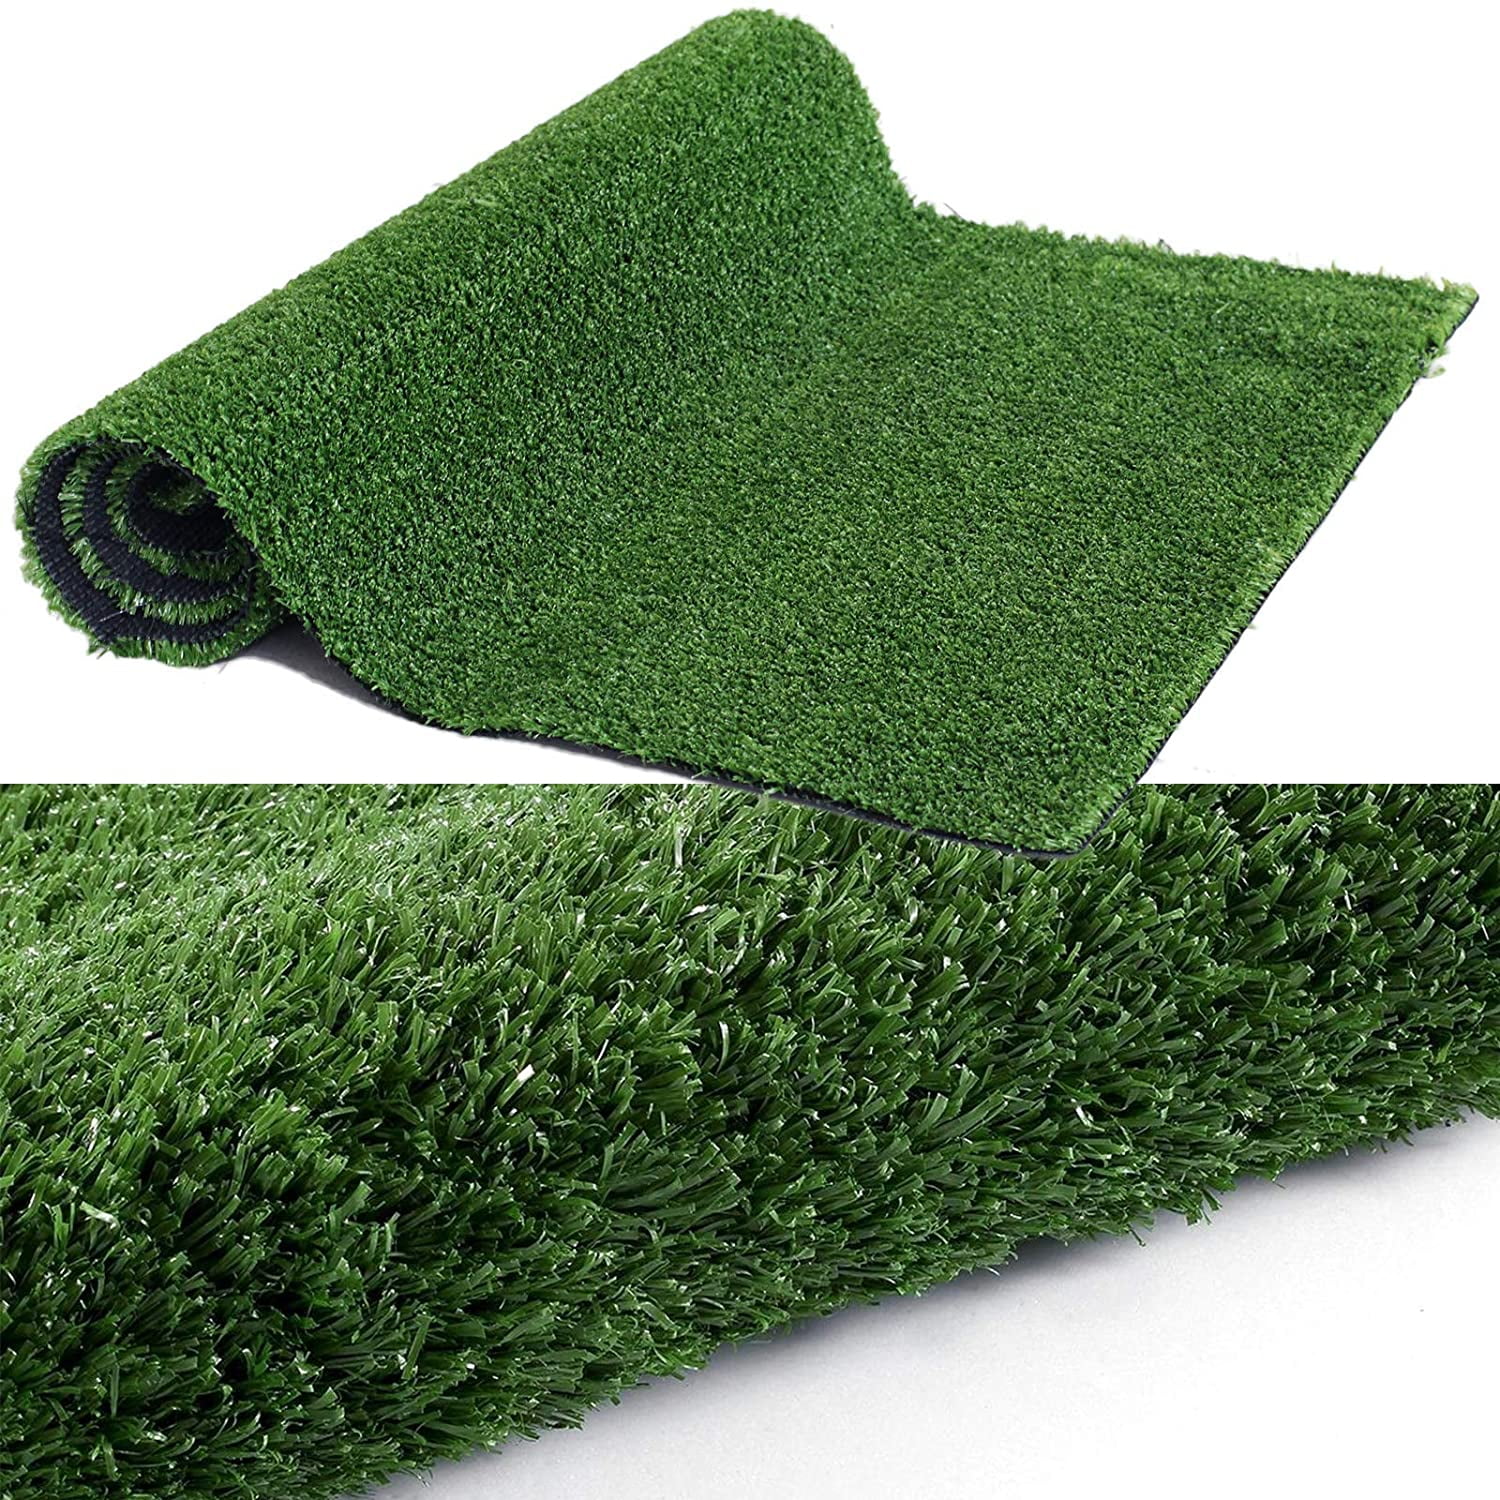 Details about   10x6.6ft Artificial Grass Mat Synthetic Landscape Fake Turf Lawn Home Garden Dec 